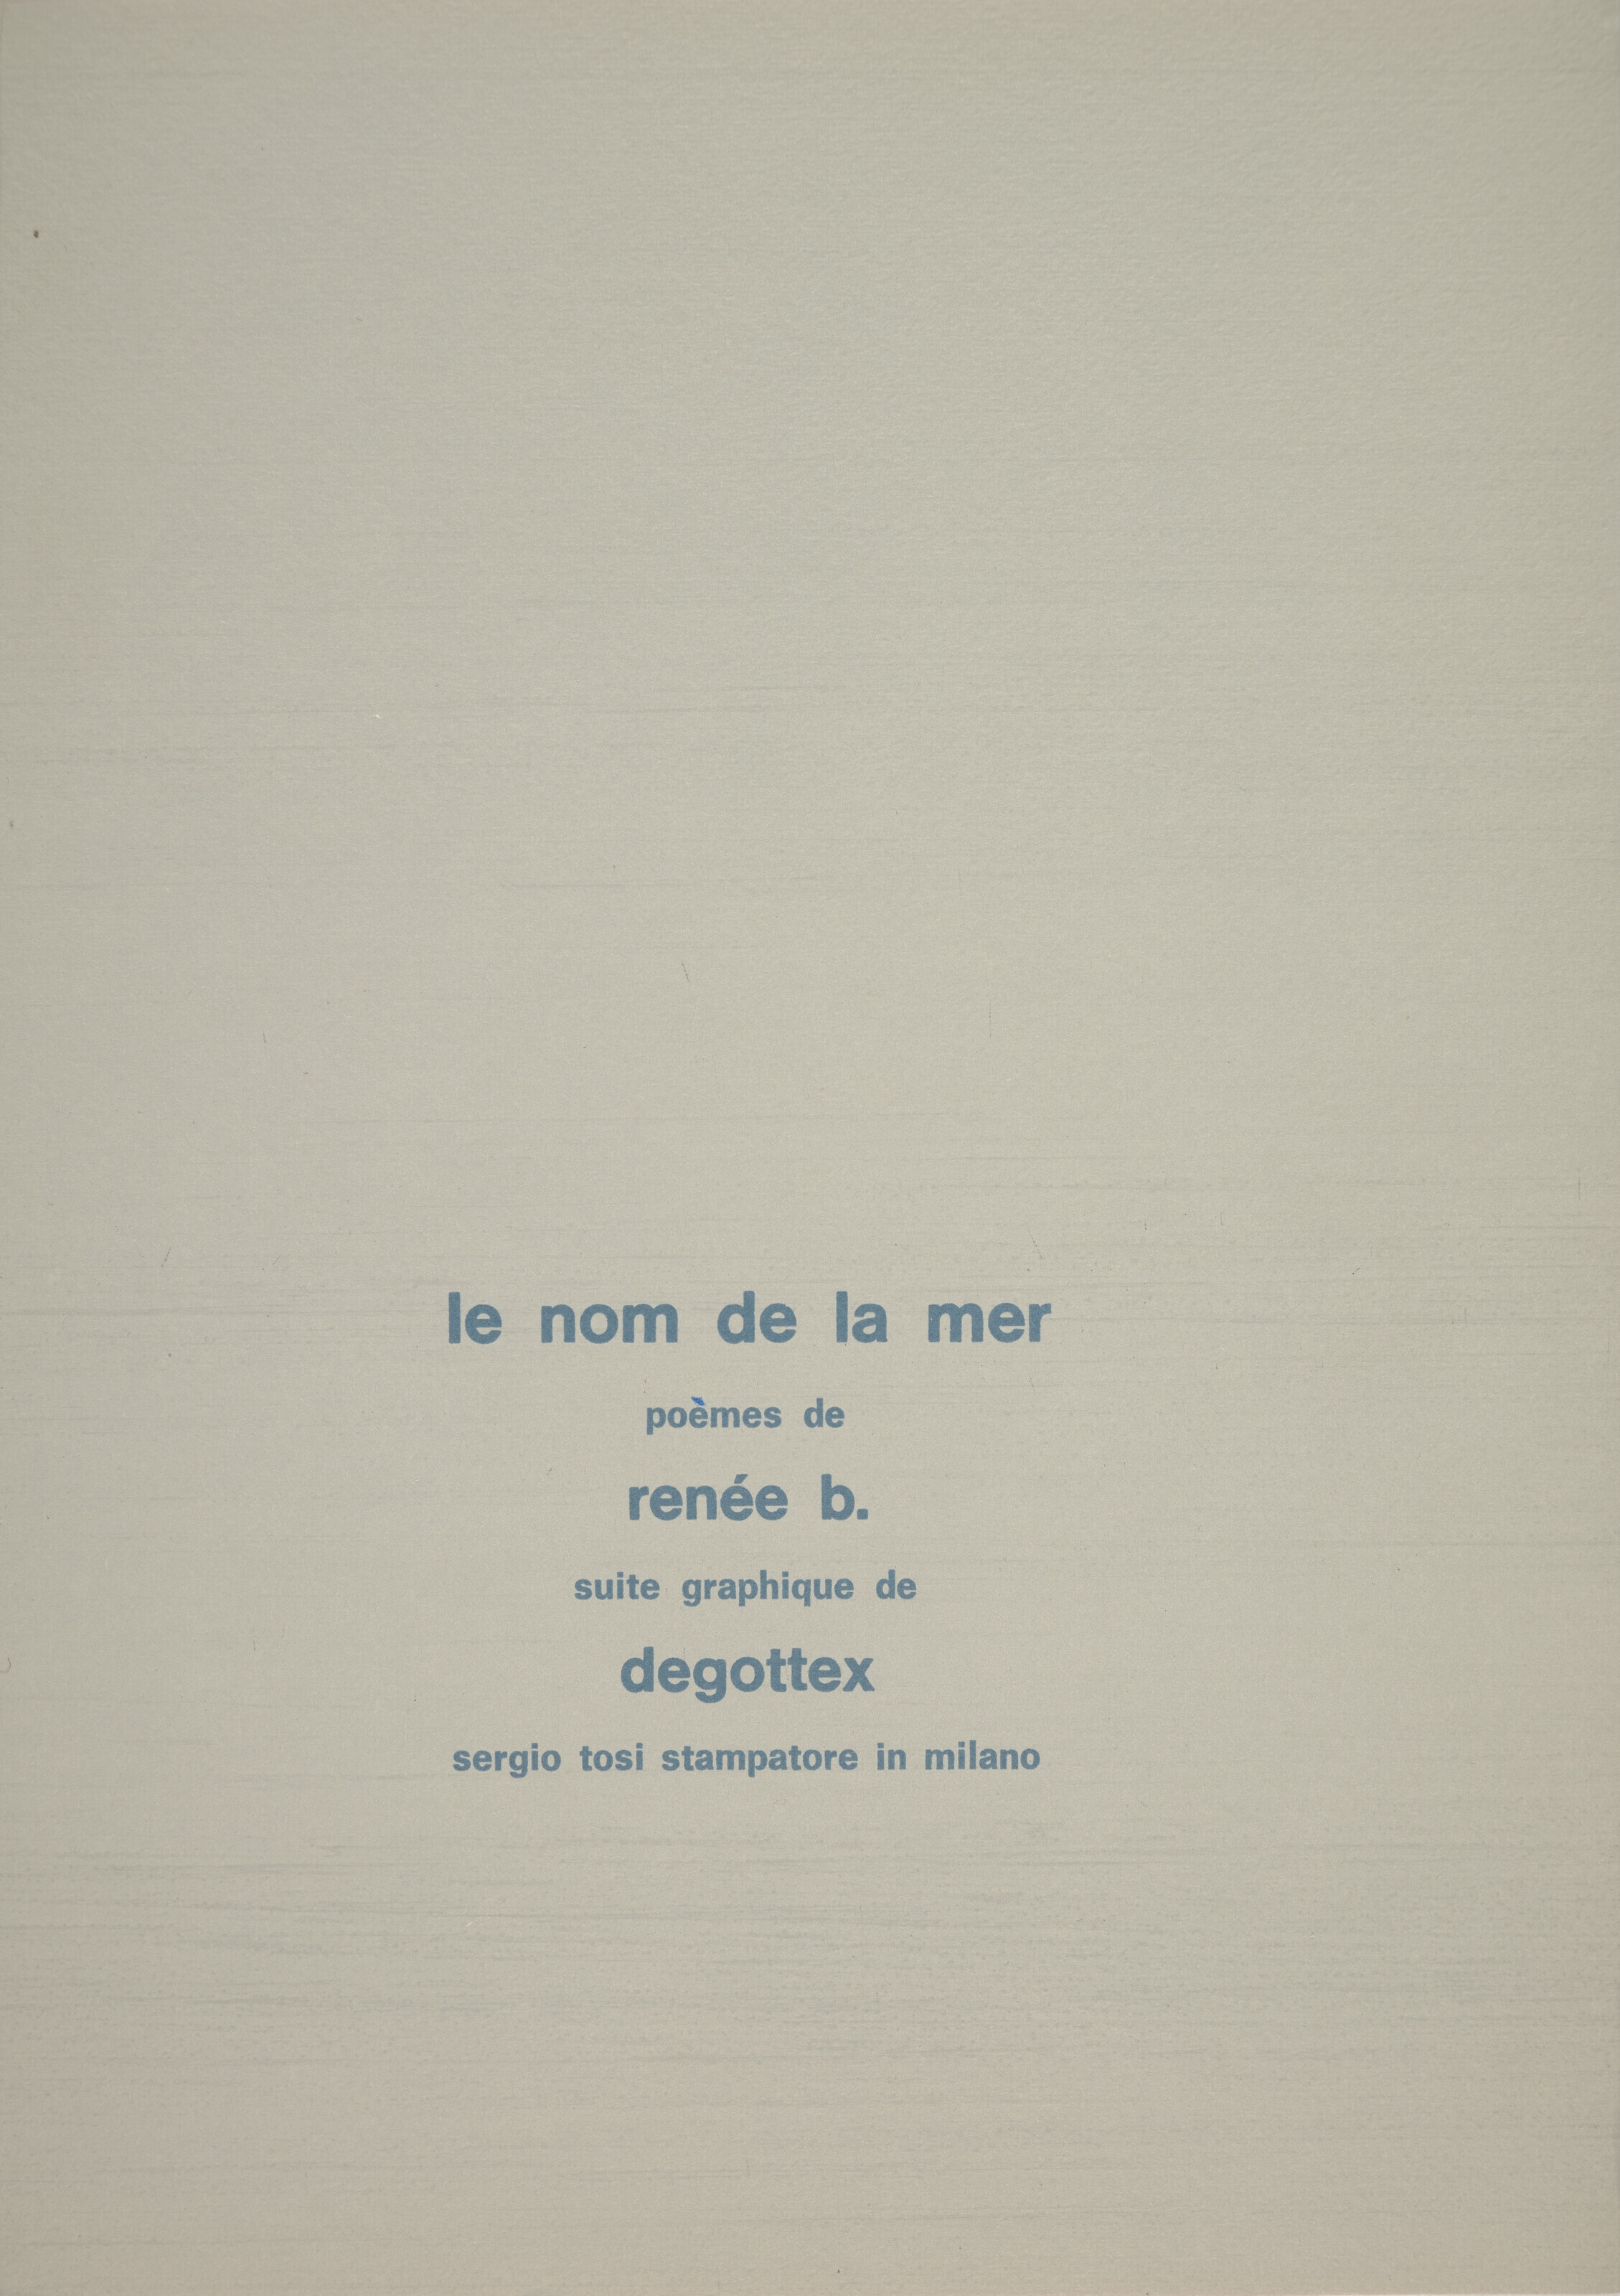 Artwork by Jean Degottex, Le Nom de la mer, Made of original lithographs